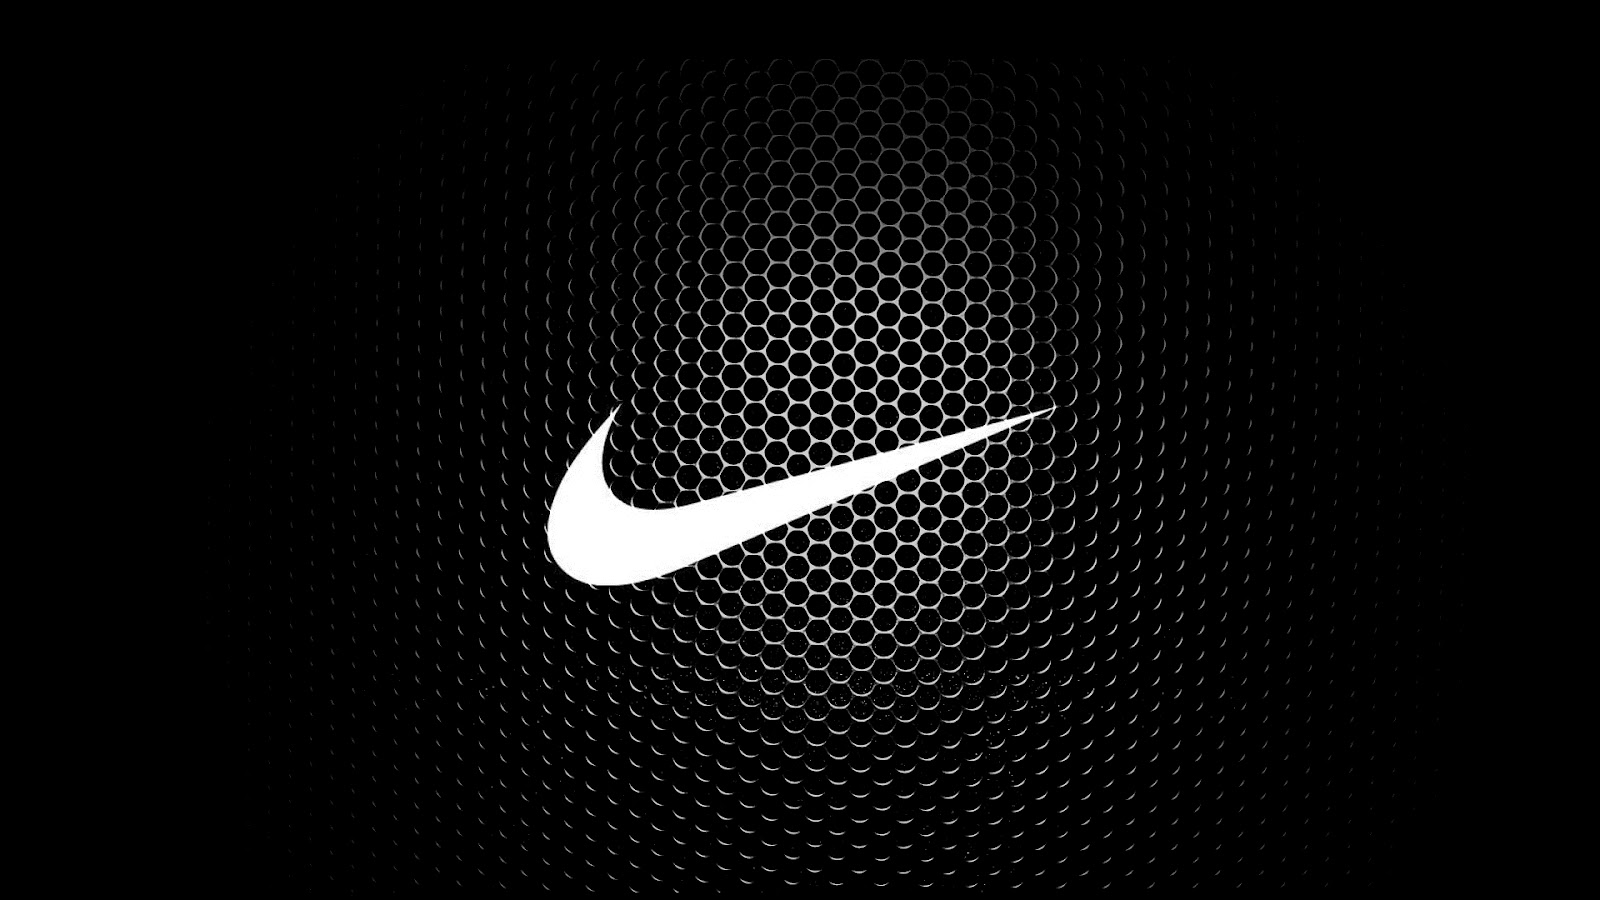 The nike logo on a black background - Nike